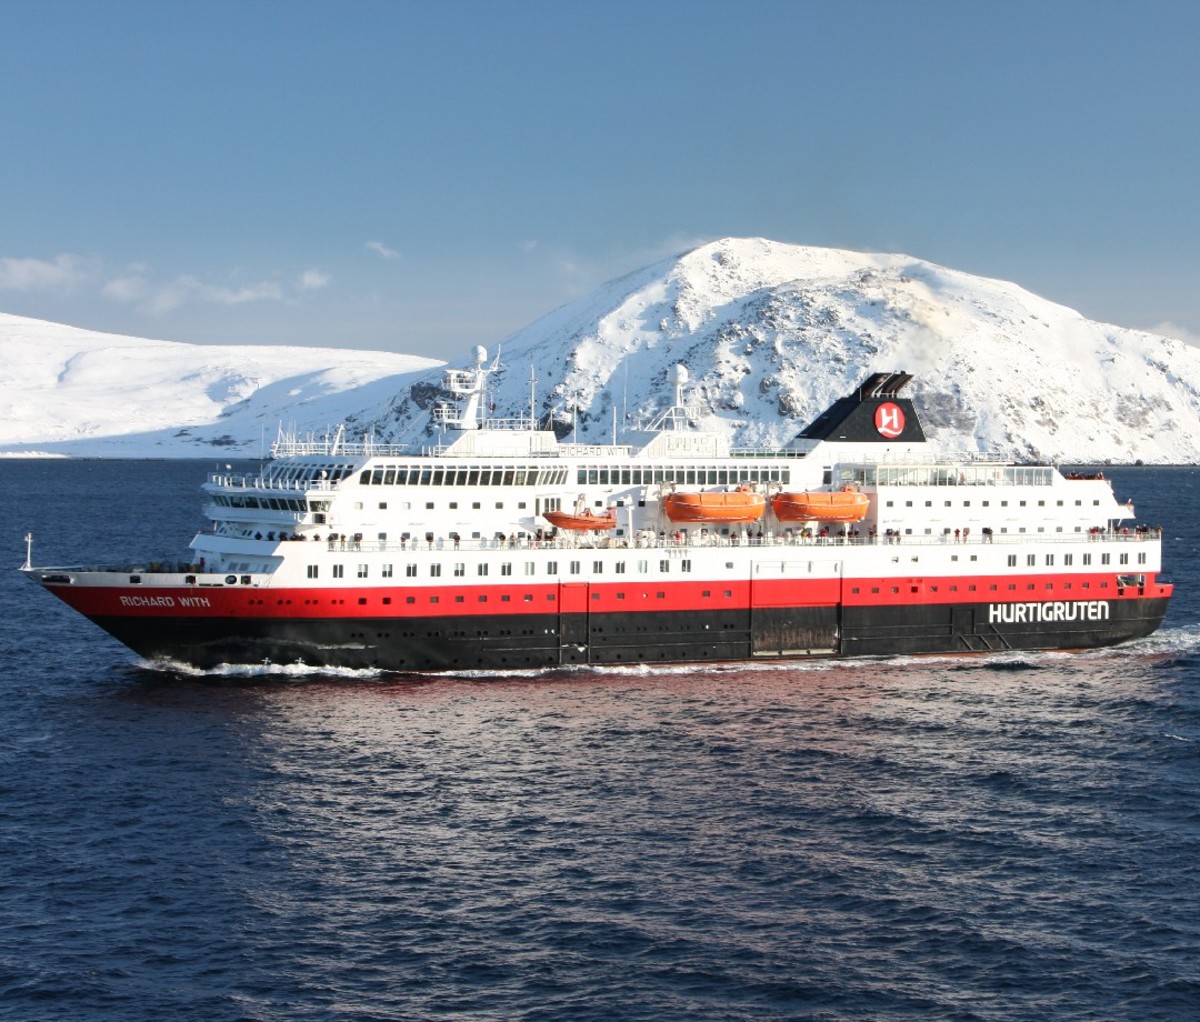 Hurtigruten cruise ship sails along the coast of Northern Norway